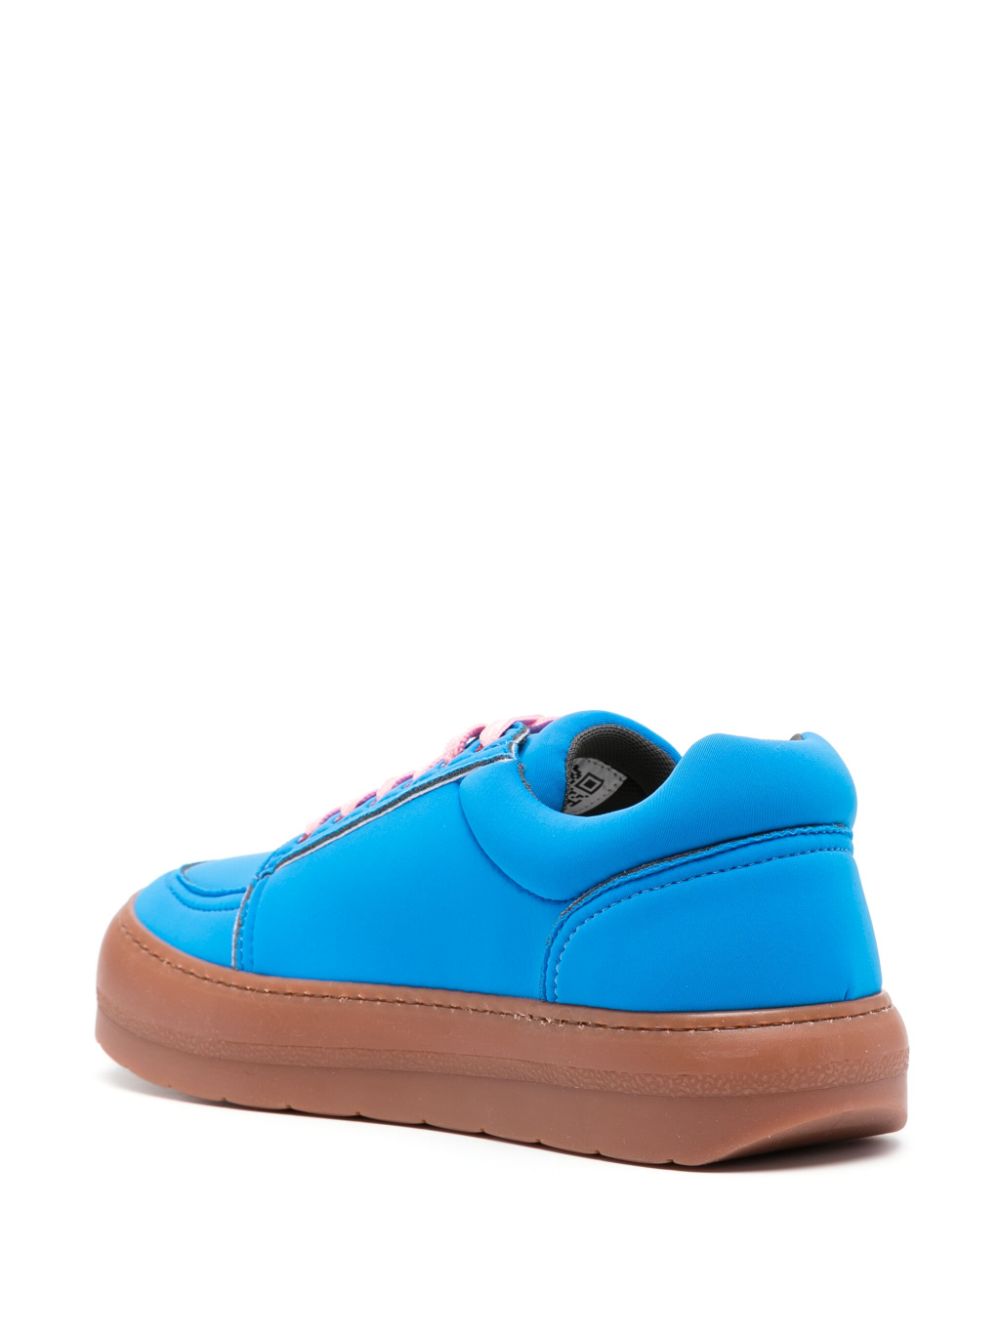 sneaker dreamy blu cobalto